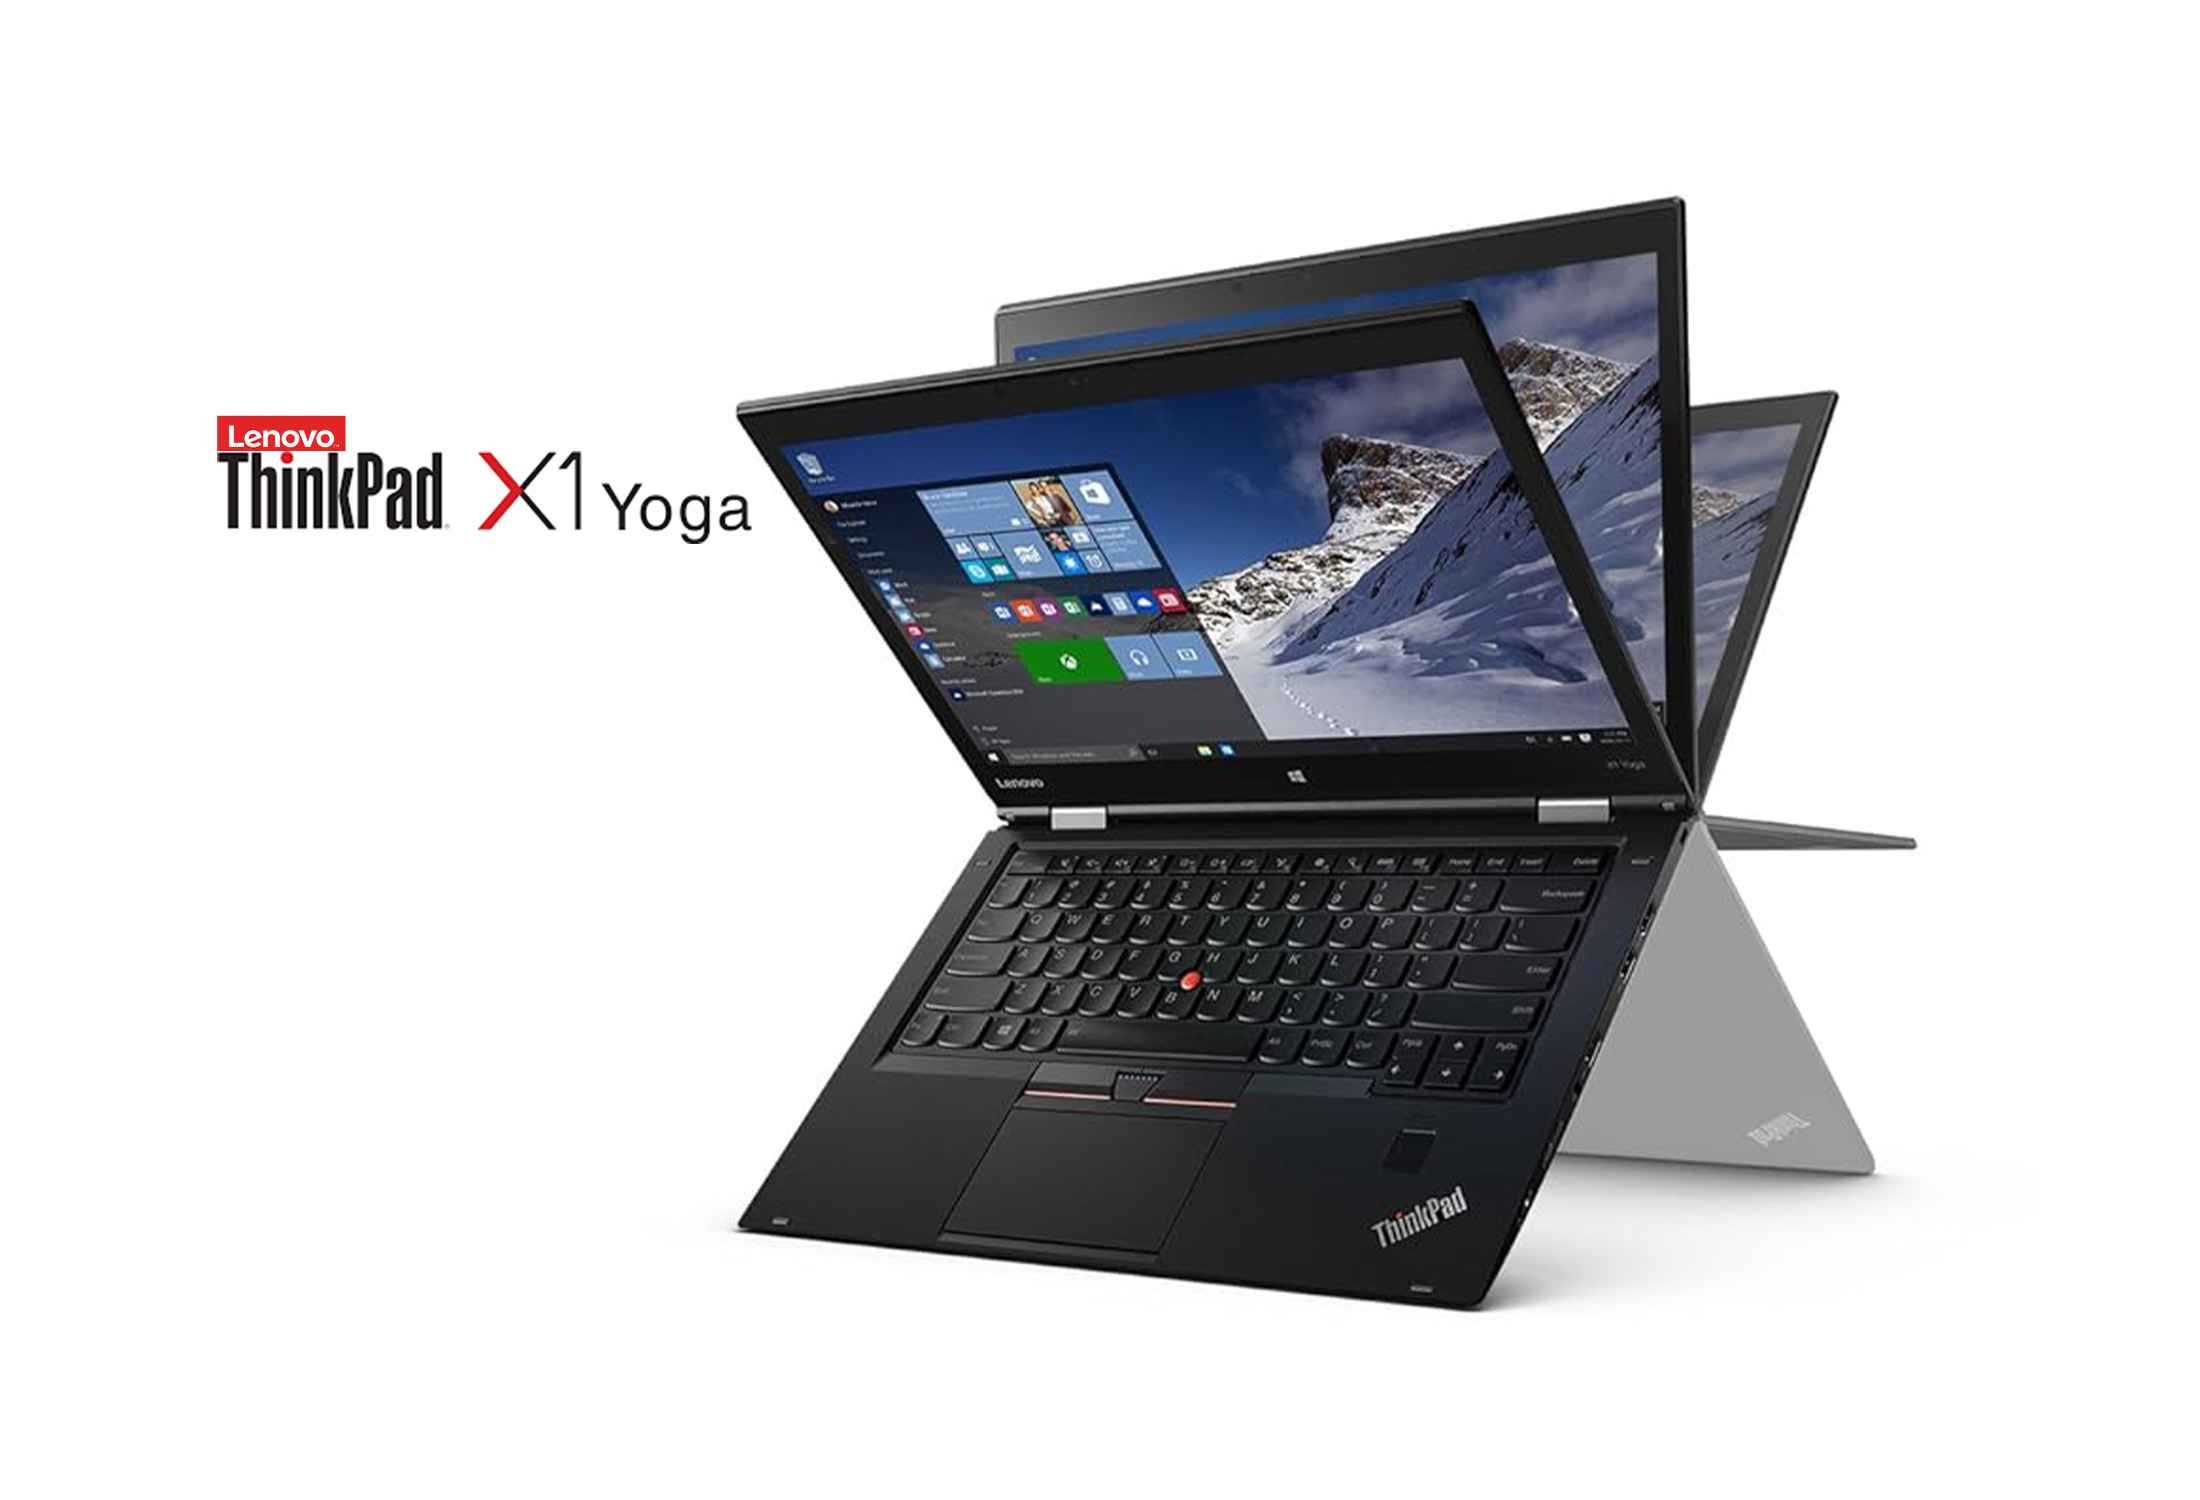 Lenovo ThinkPad X1 Yoga Touch Wacom i5-6300U no Pen-VI6mh.jpeg